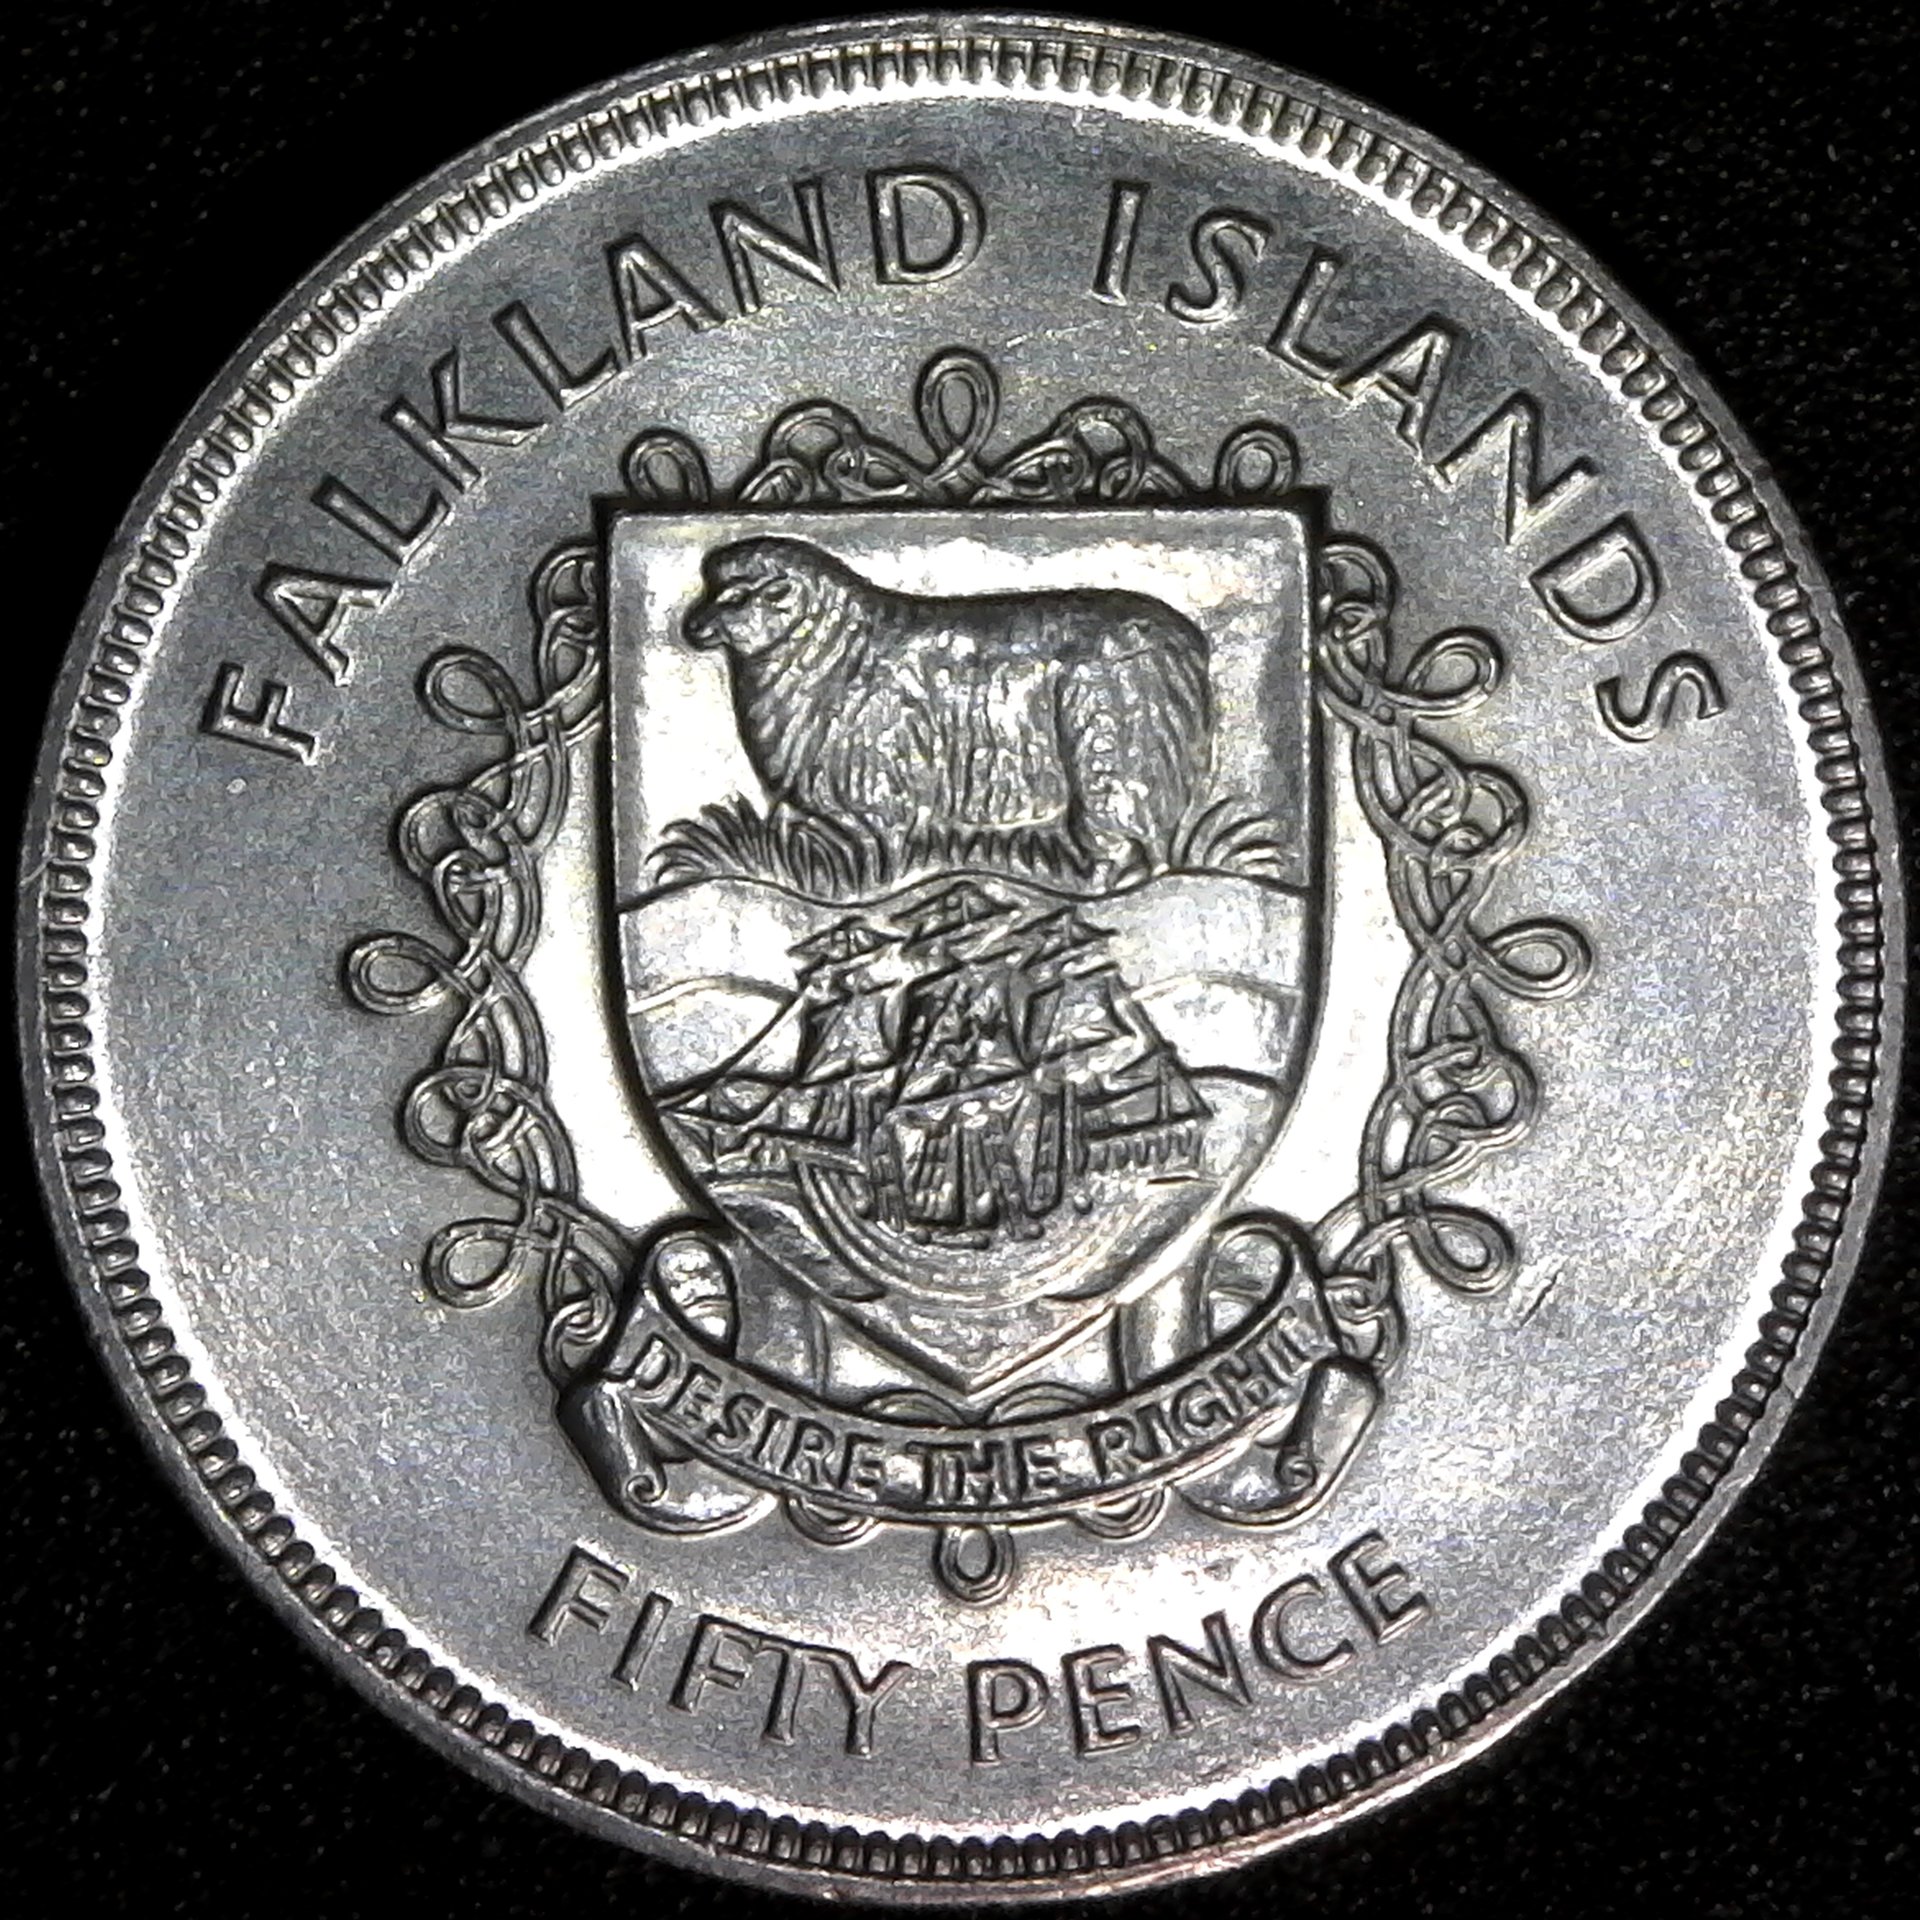 Falklands Islands Fifty Pence 1977 rev.jpg